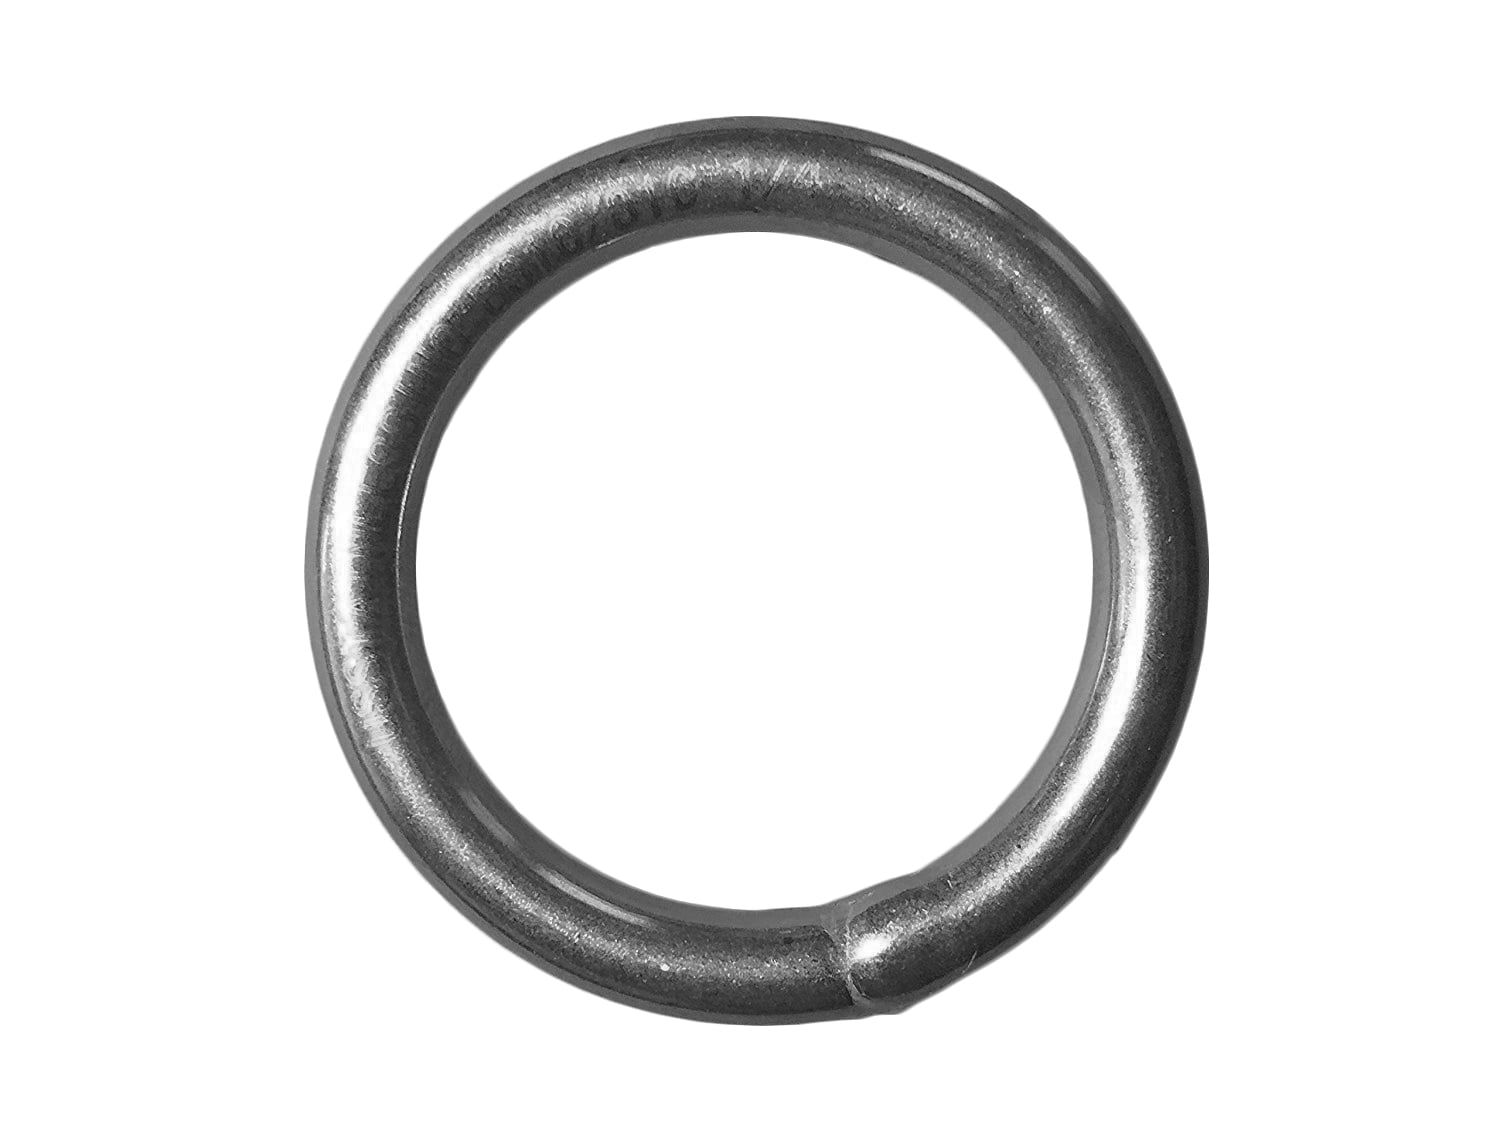 5/16" x 1 5/8" Marine Round Ring 8 mm x 40 mm Grade 316 Stainless Steel 